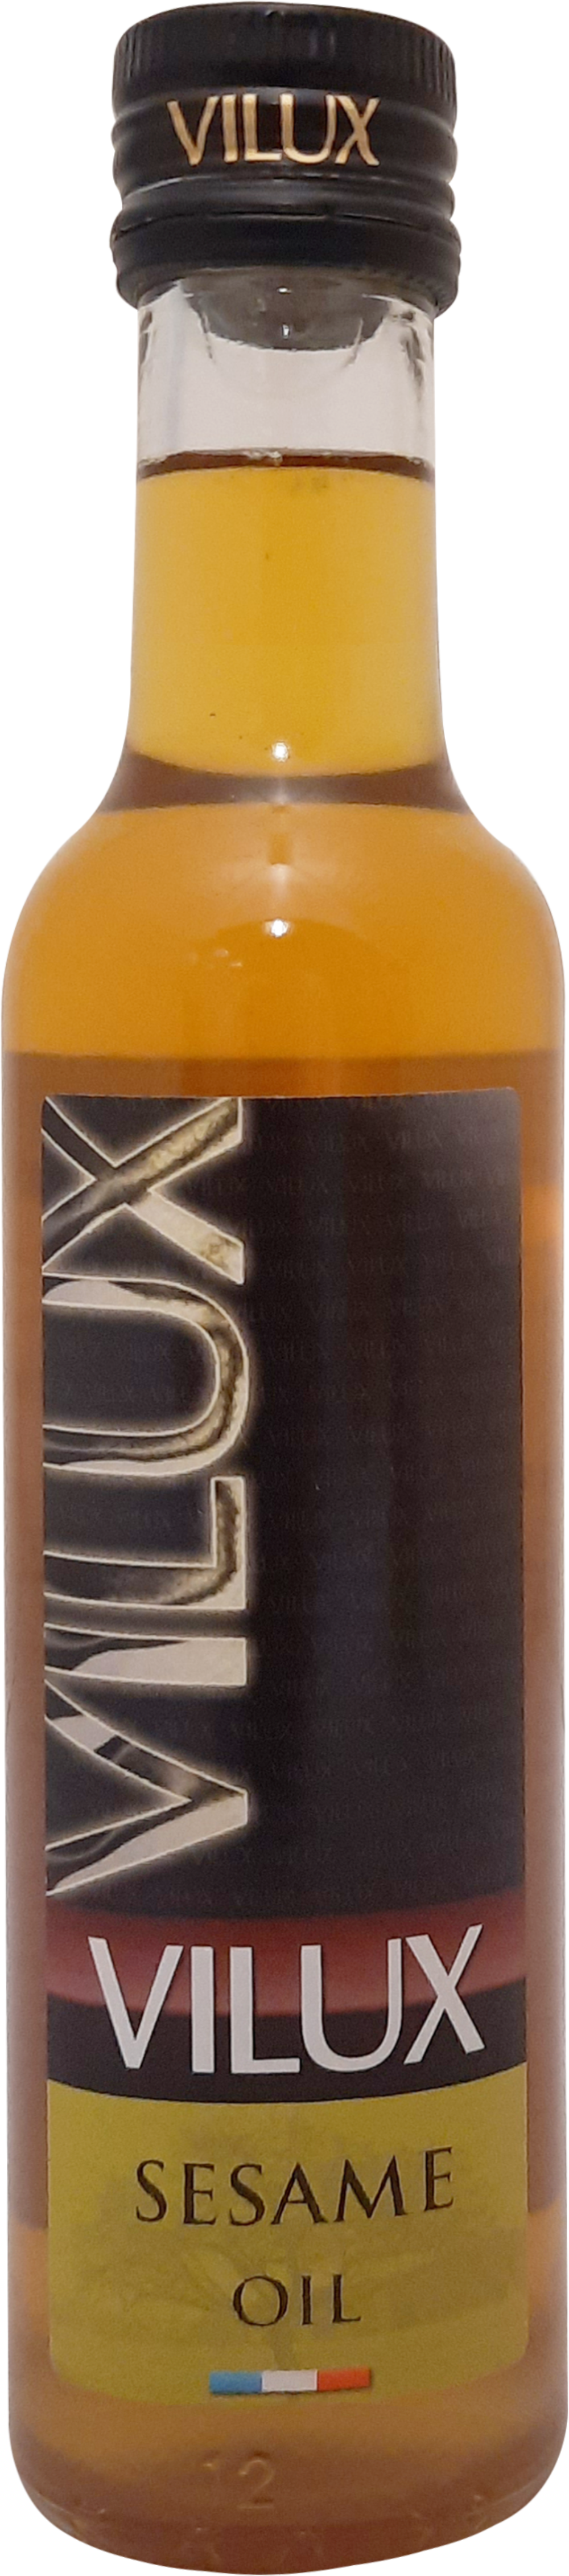 VILUX Sesame Oil 25cl